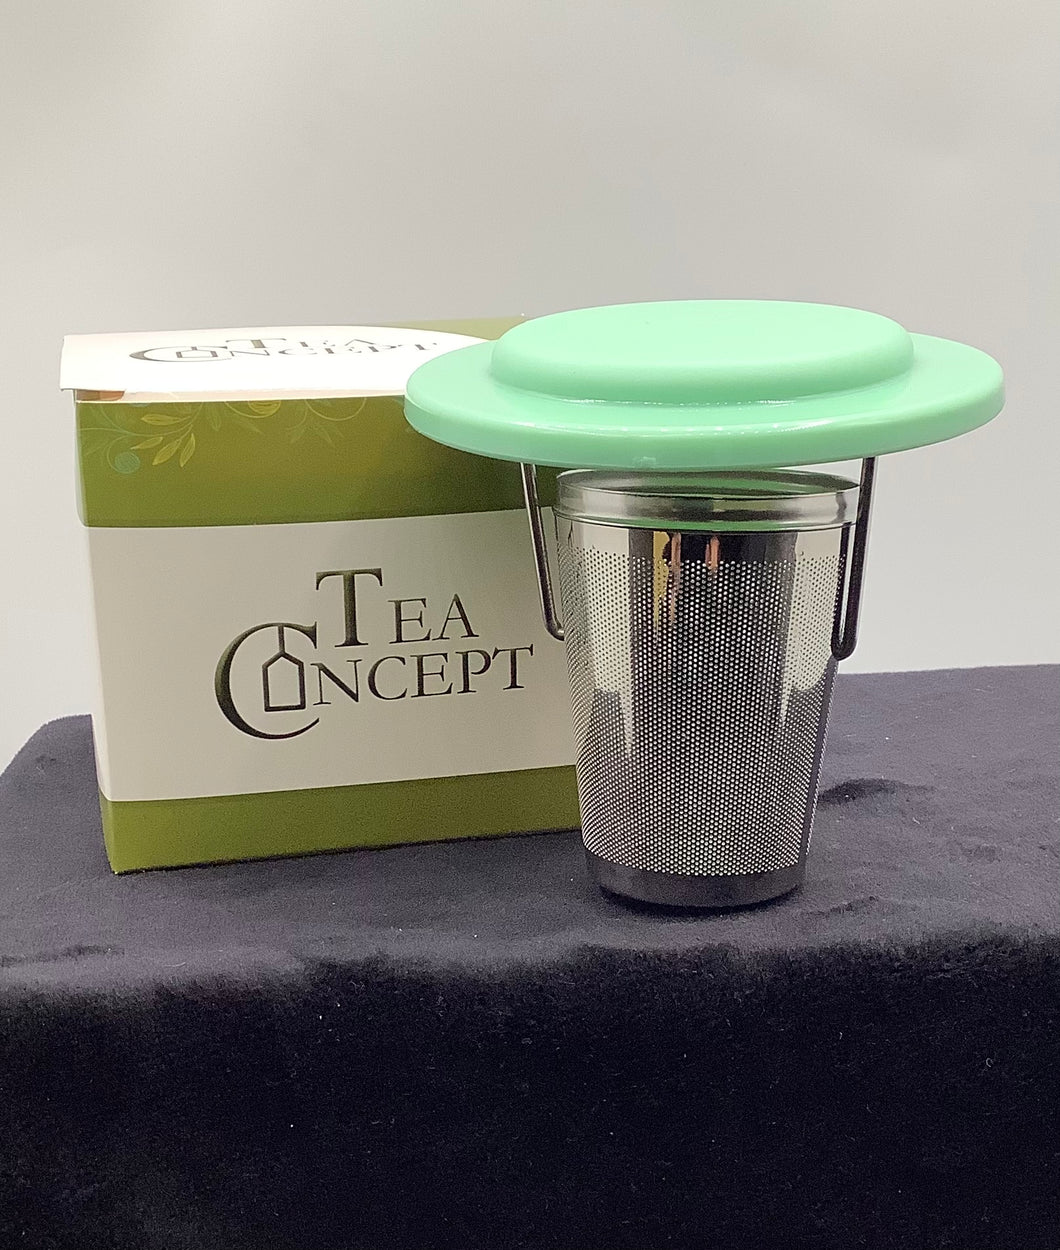 Tea Concept Tea Infuser